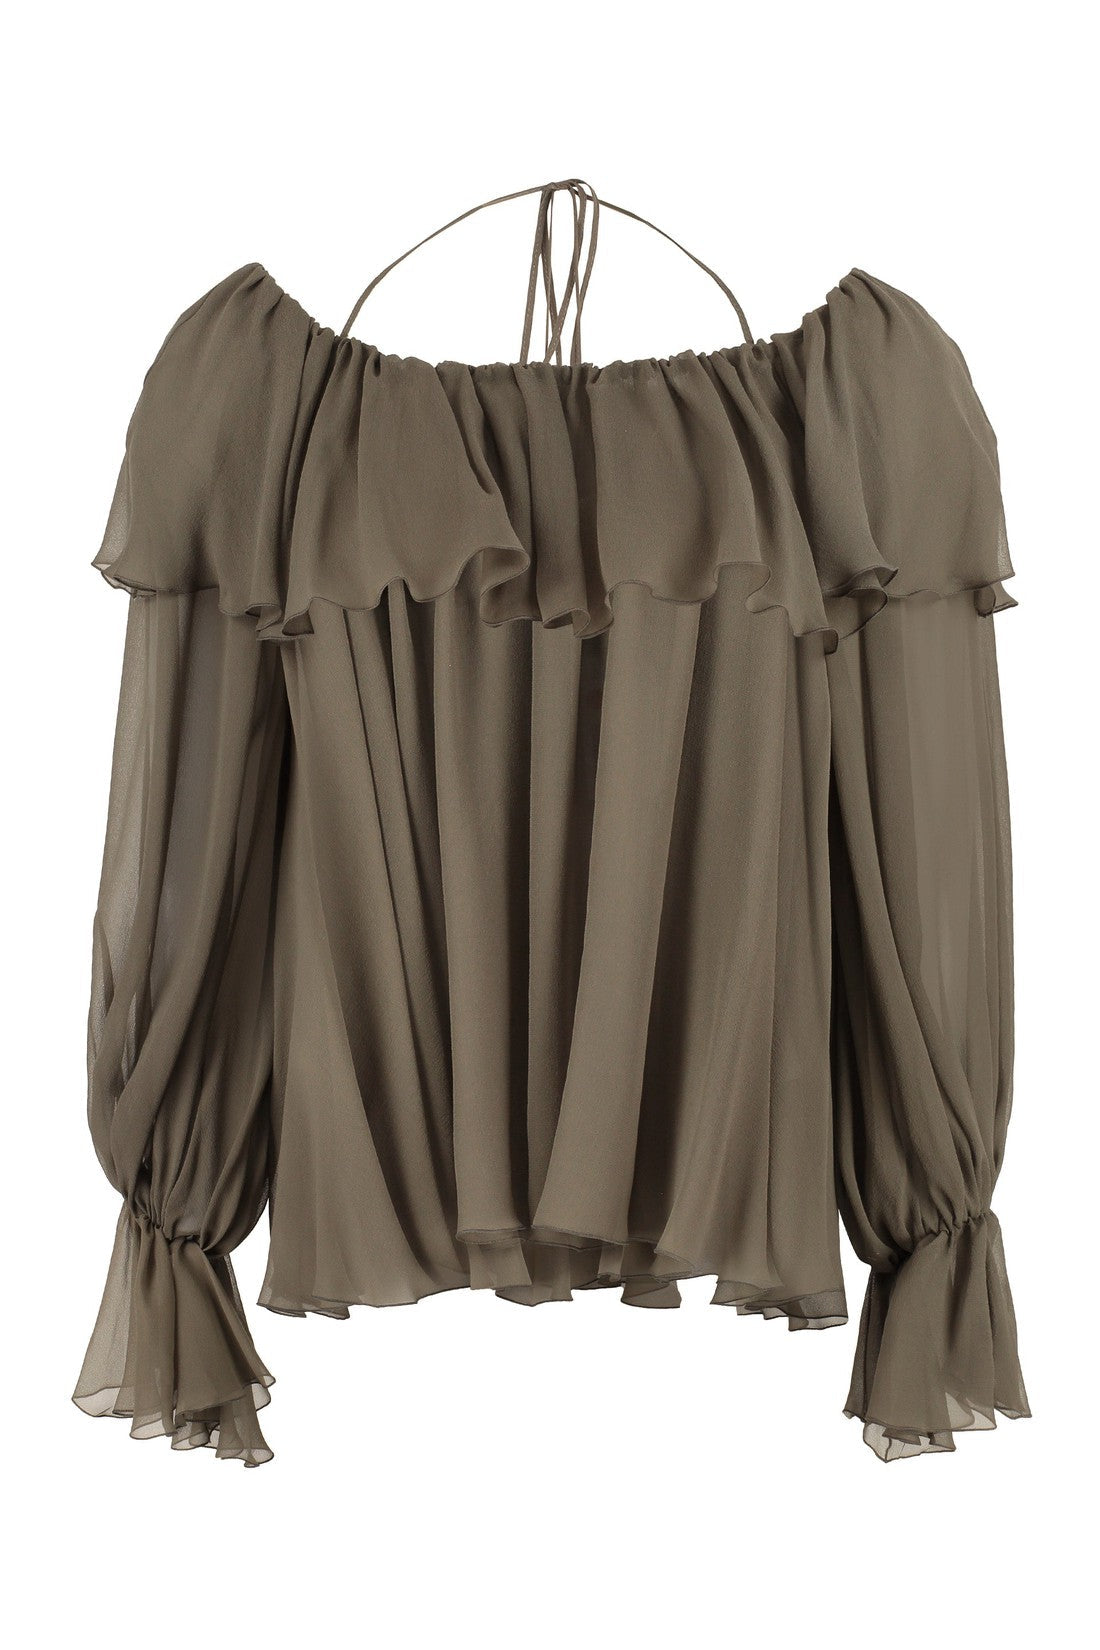 Blumarine-OUTLET-SALE-Ruffled silk blouse-ARCHIVIST